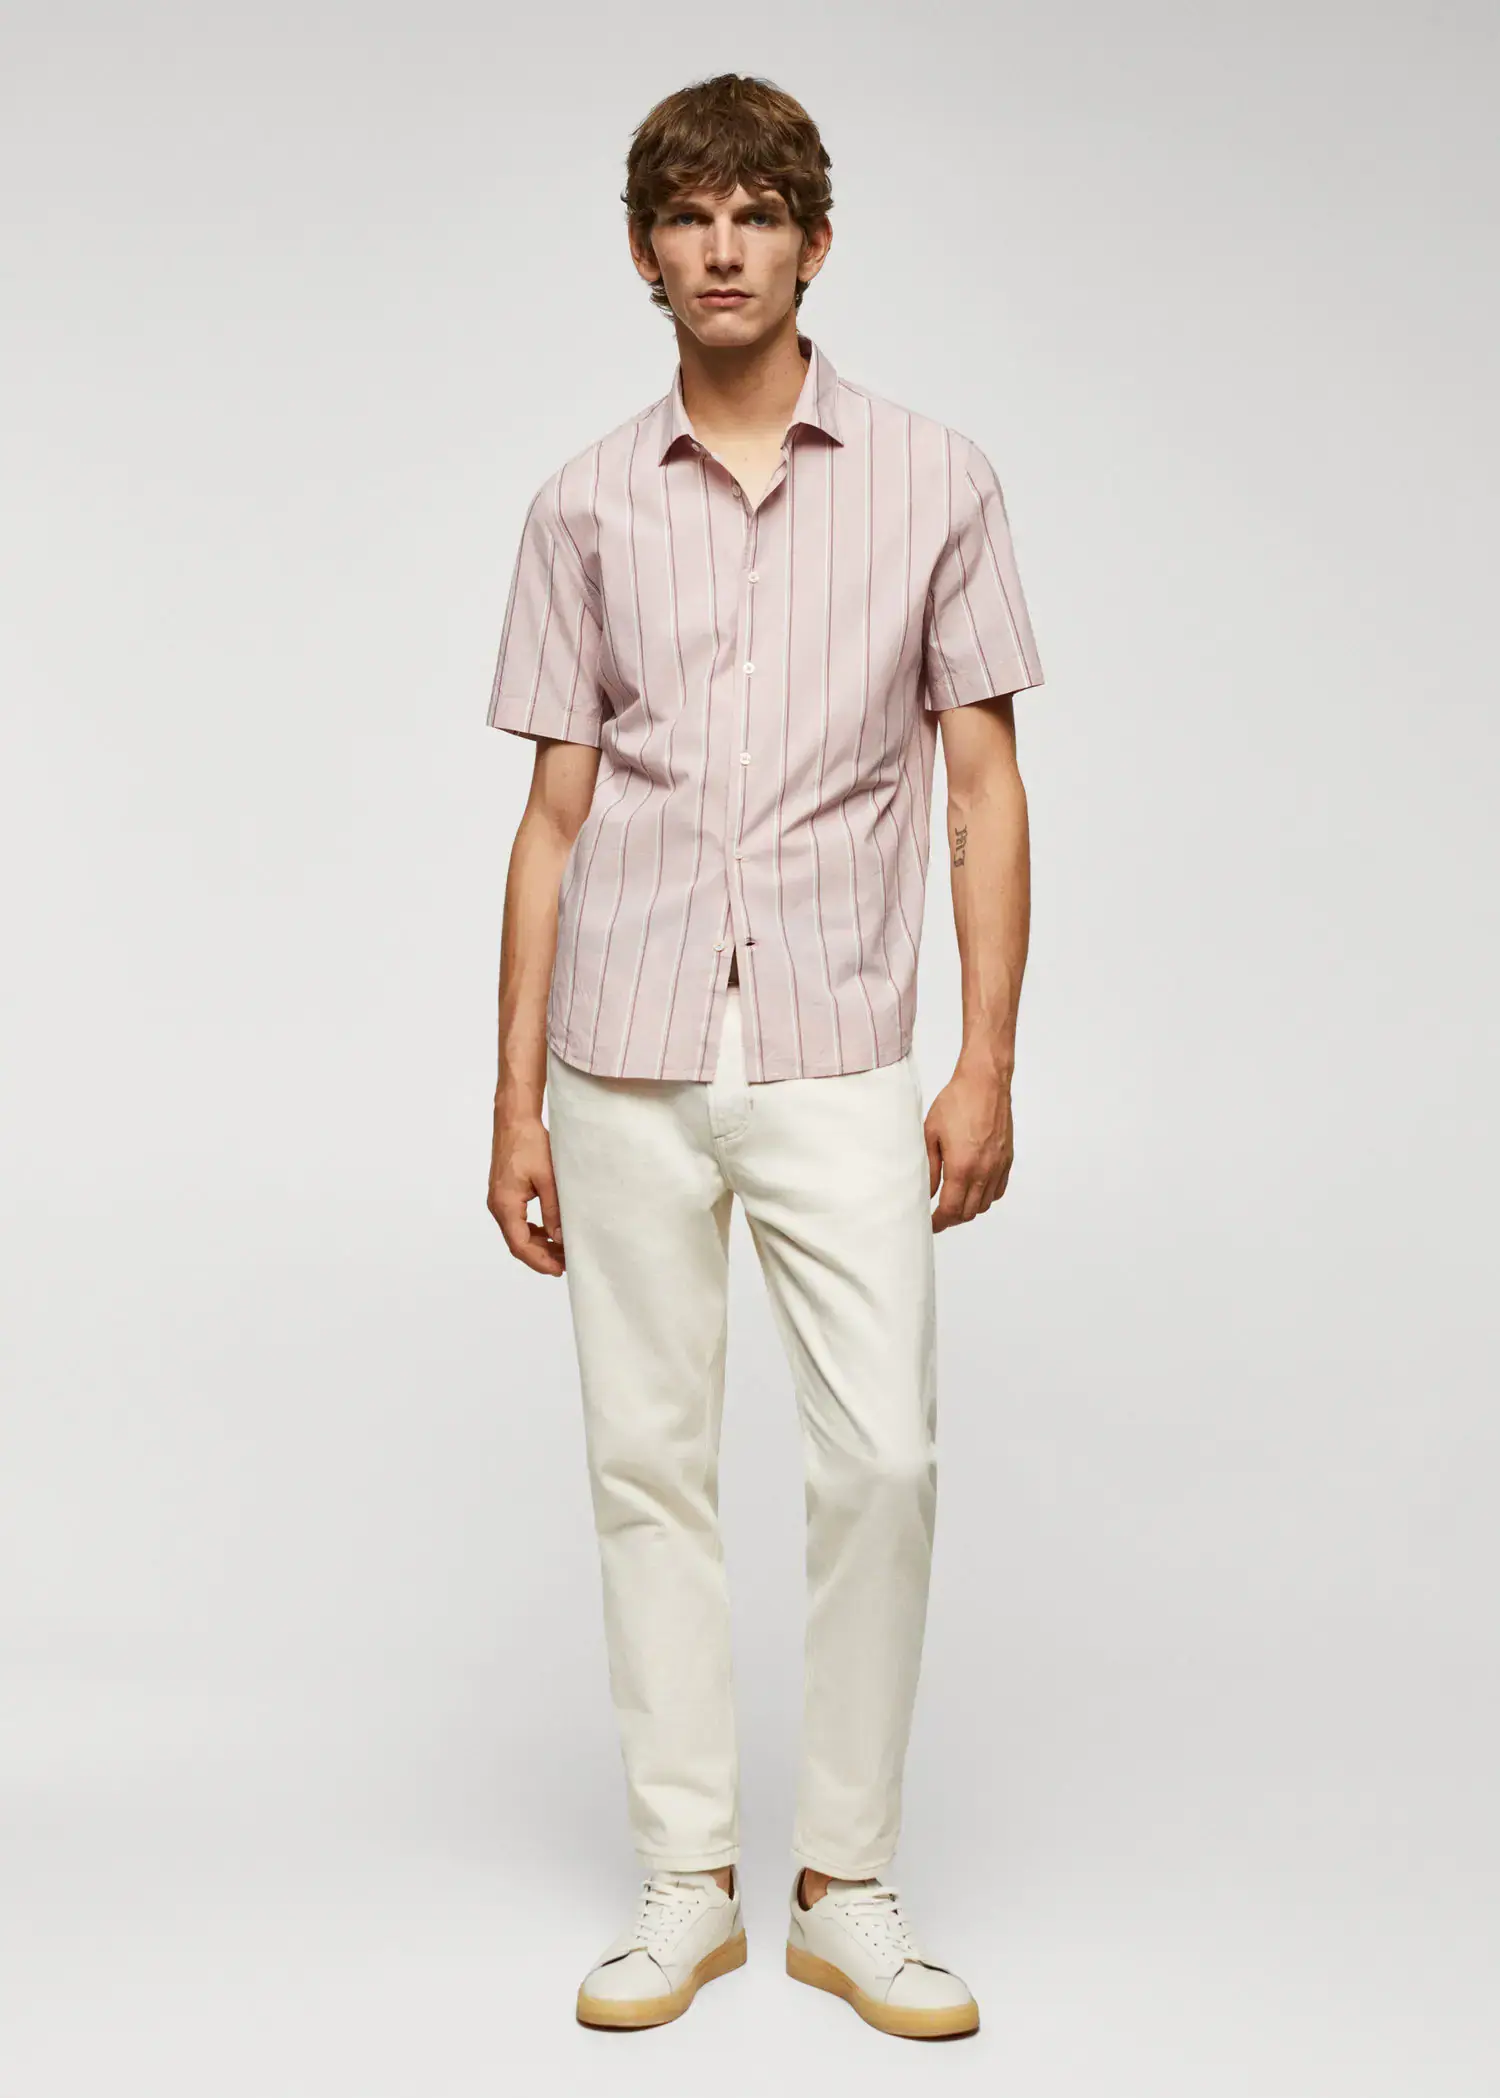 Mango Striped light cotton shirt. 2